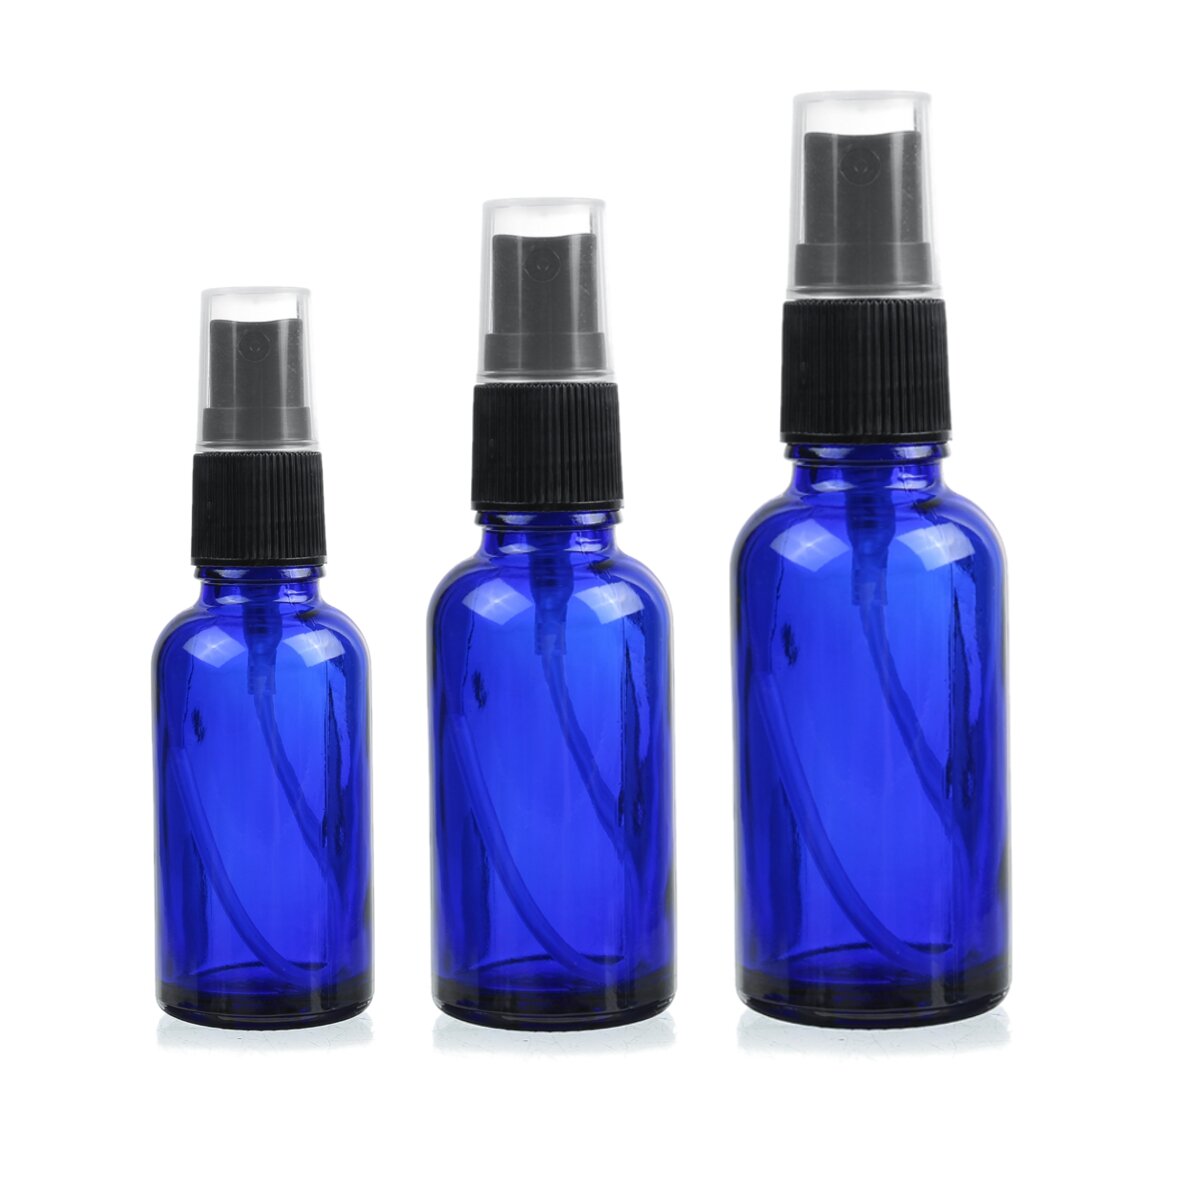 30ml/50ml/100ml Blue Glass Bottle Sprayer Portable Essential Oils Perfume Container